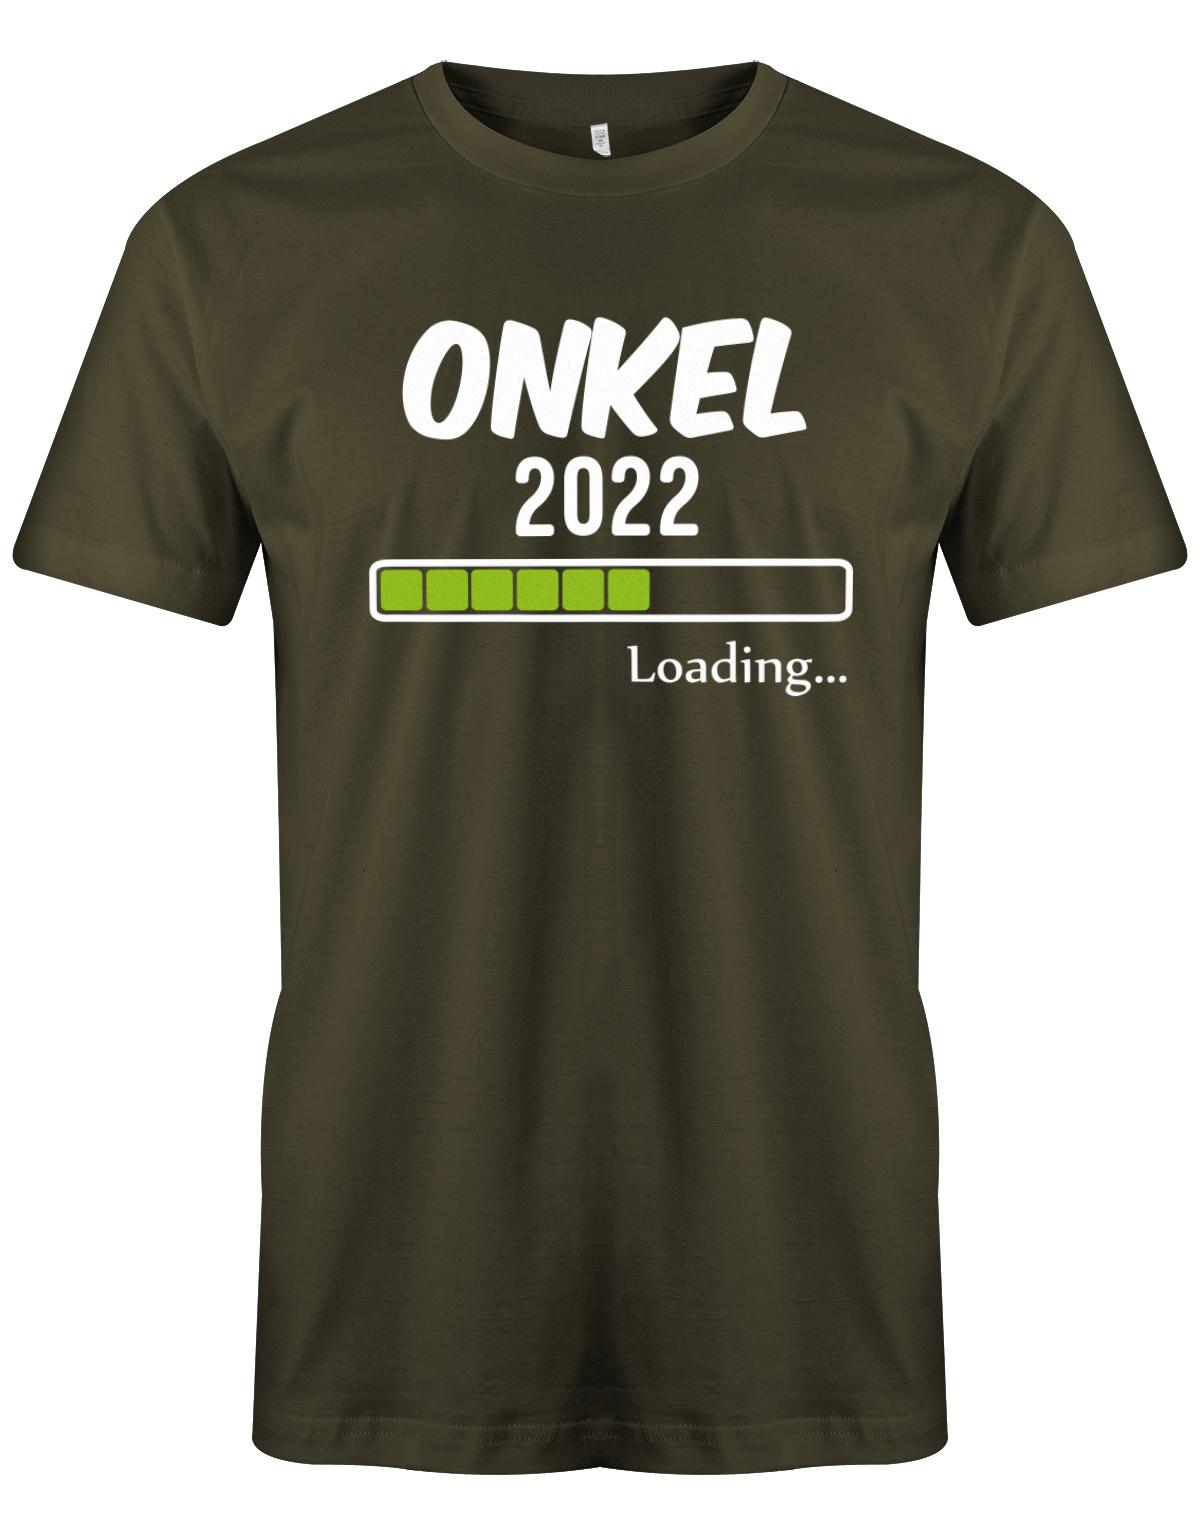 Onkel-loading-2022-Herren-Shirt-Army